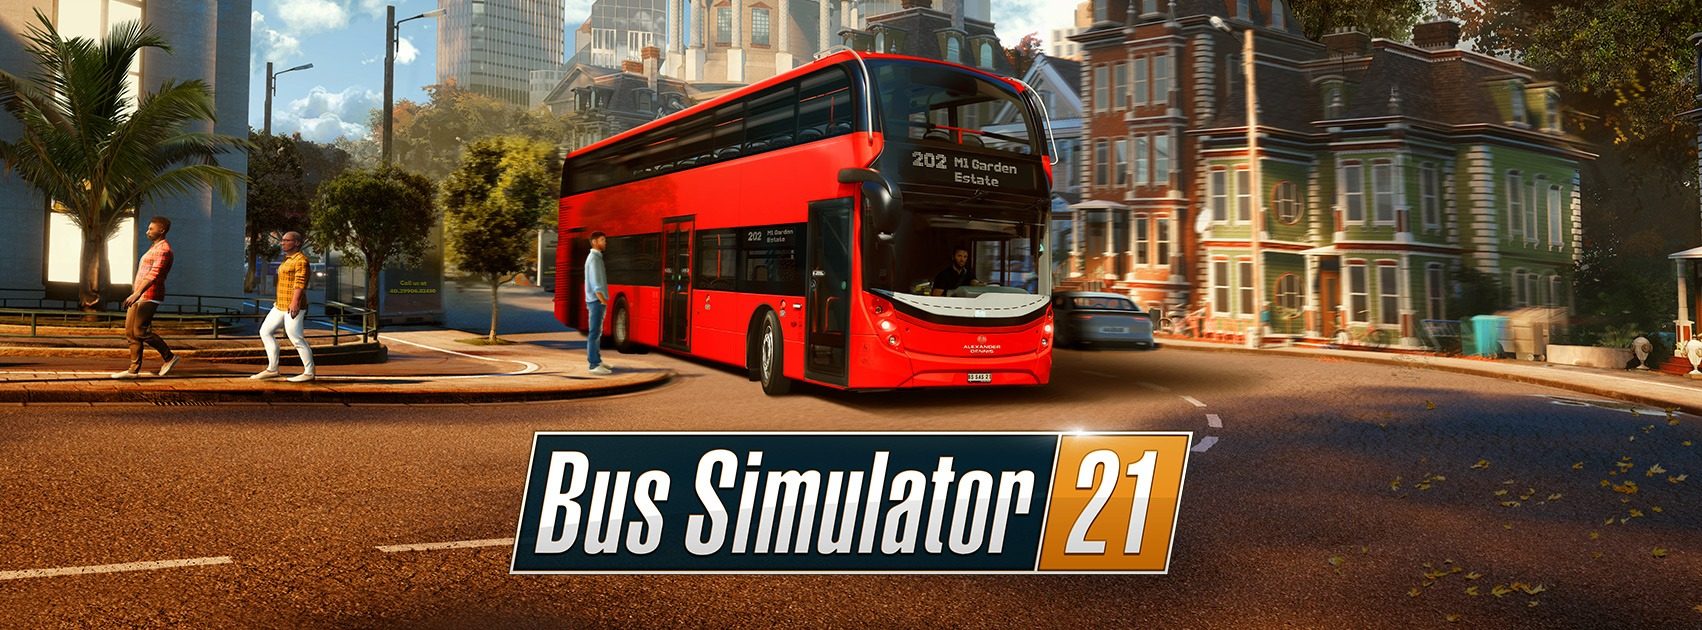 bus simulator 16 key